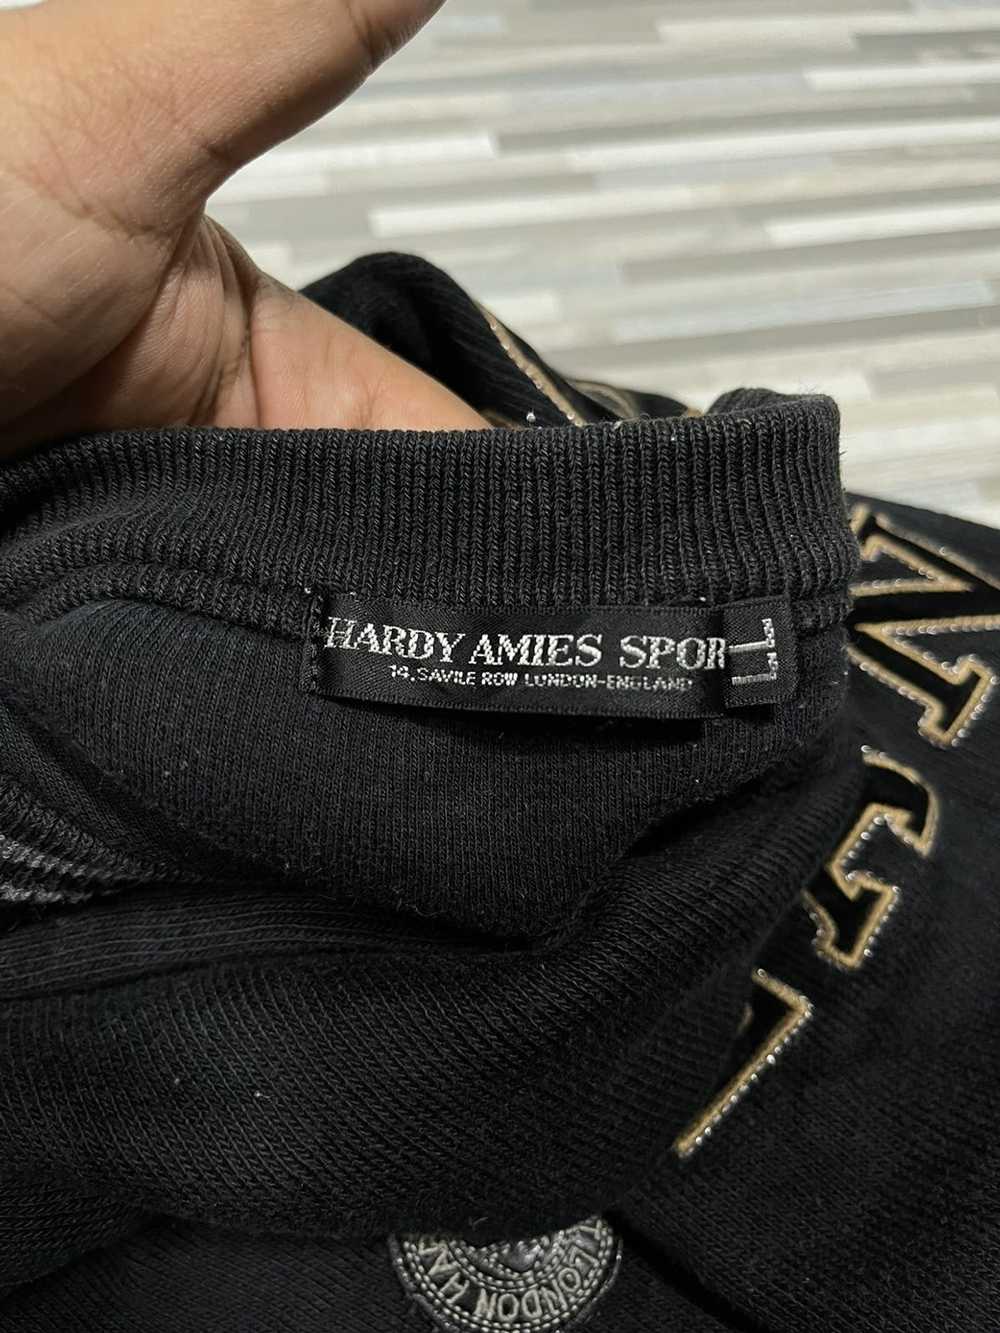 Hardy Amies Vintage Hardy Amies Sweatshirt - image 3